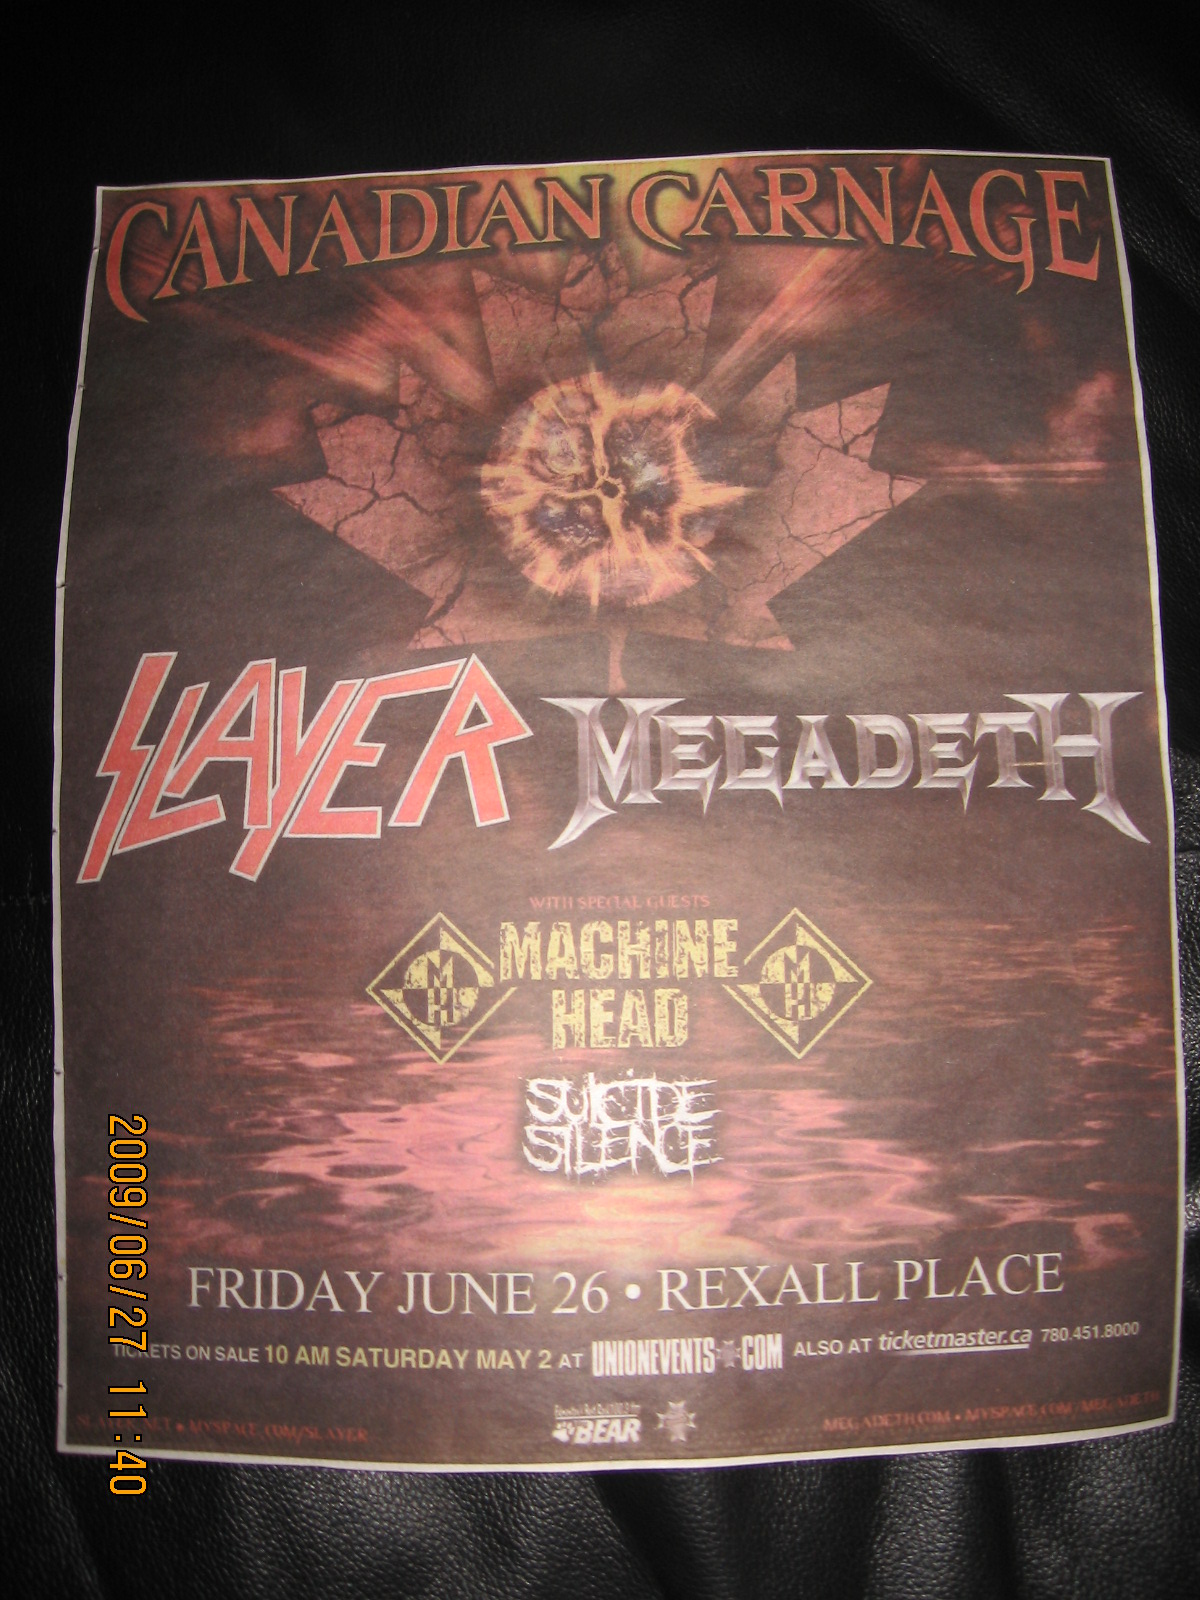 [Slayer+Megadeth+Poster+June+26+2009.JPG]